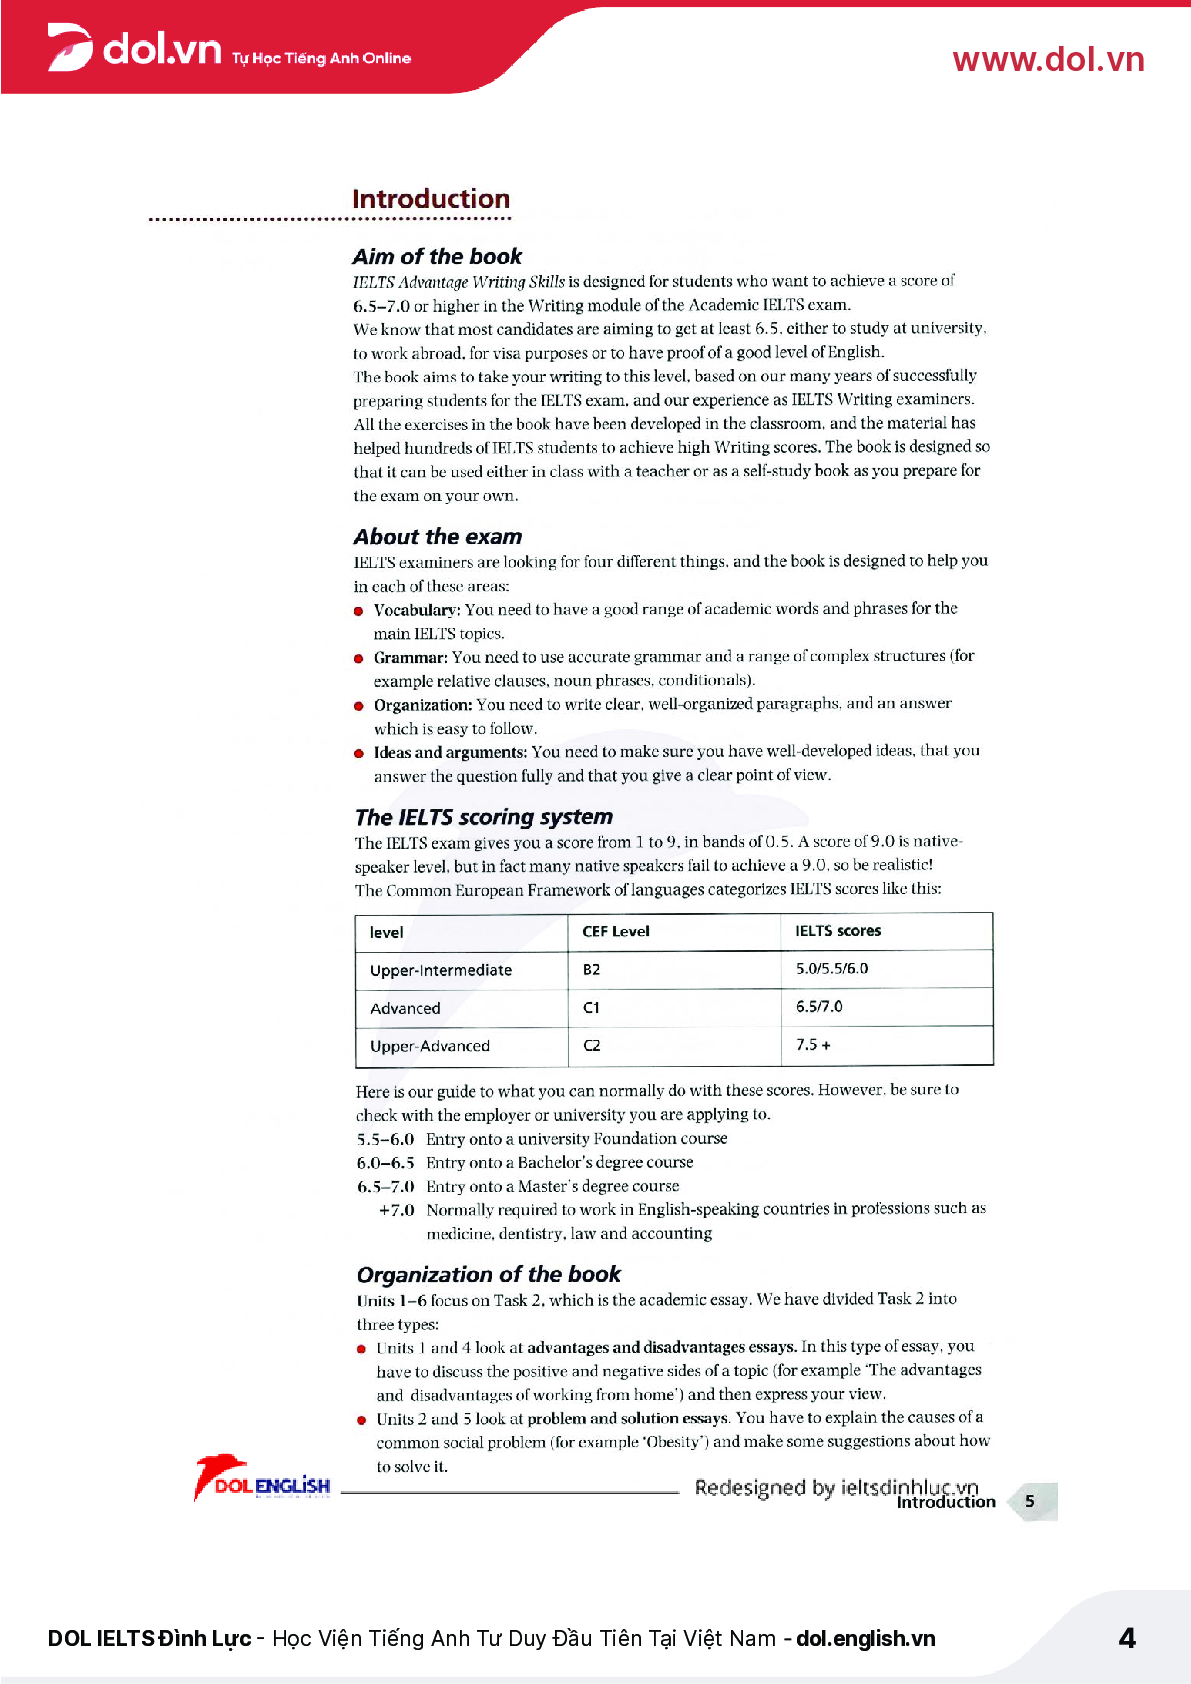 Sách IELTS Advantage Writing Skills pdf | Xem online, tải PDF miễn phí (trang 4)